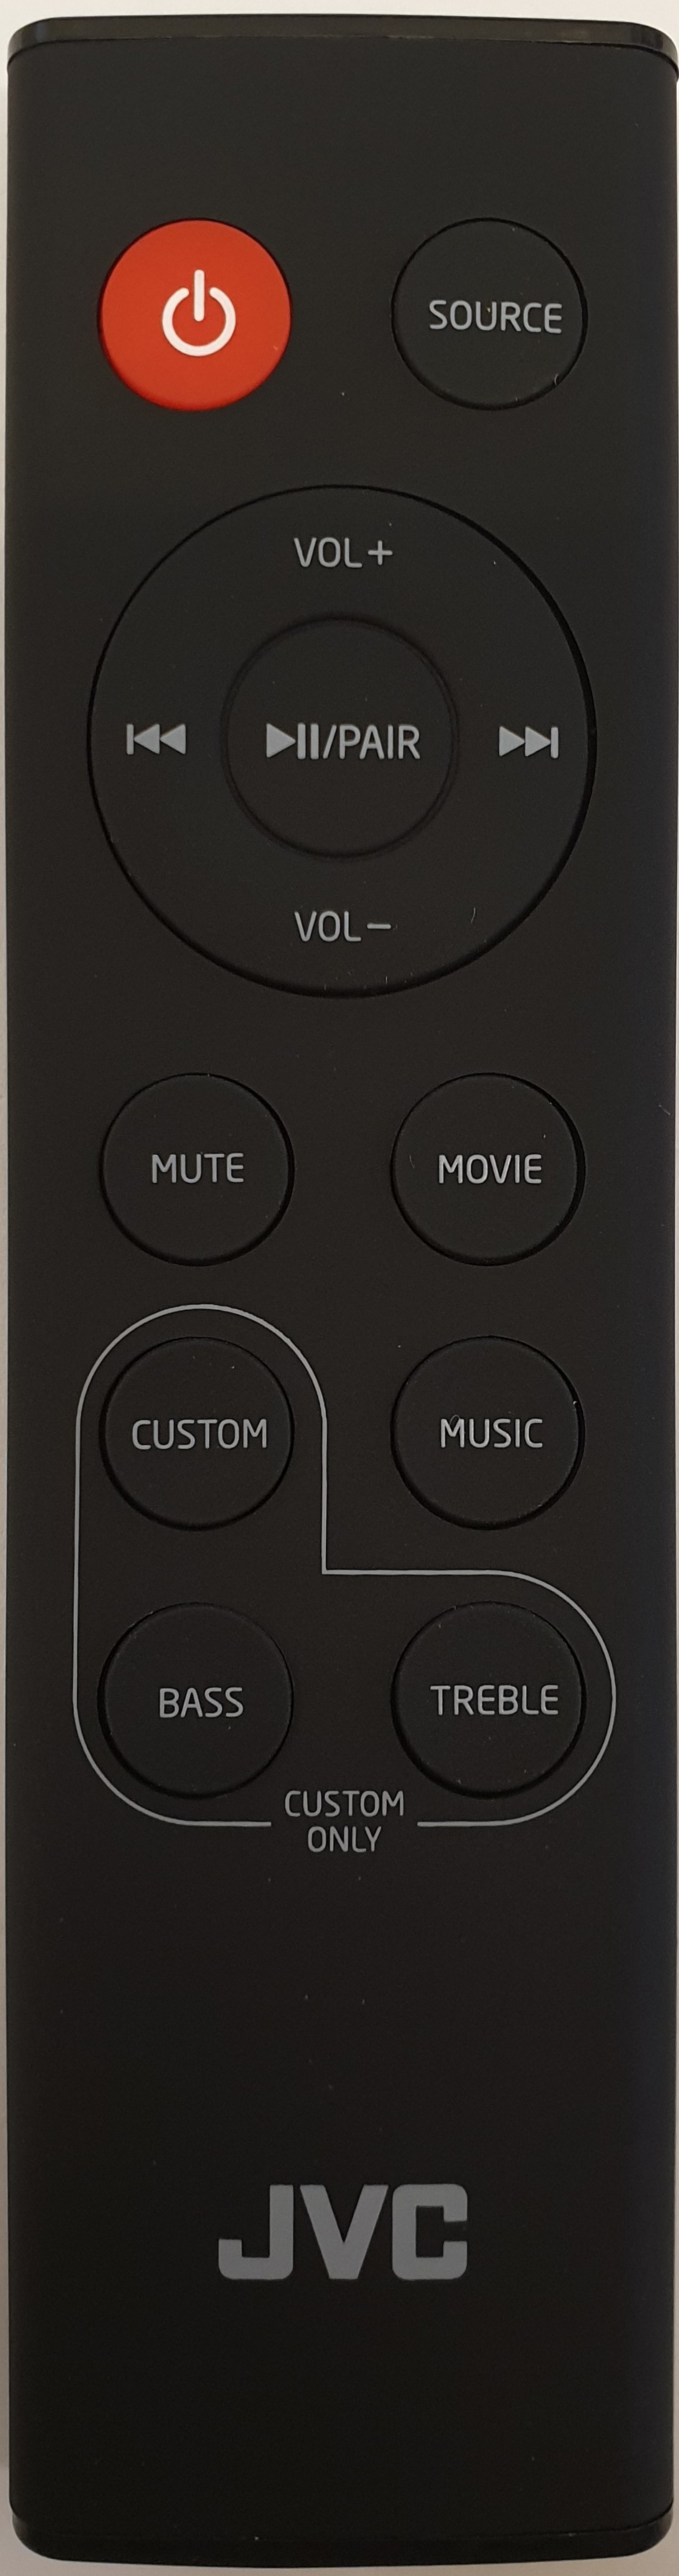 JVC RM-STHD357 Remote Control Original